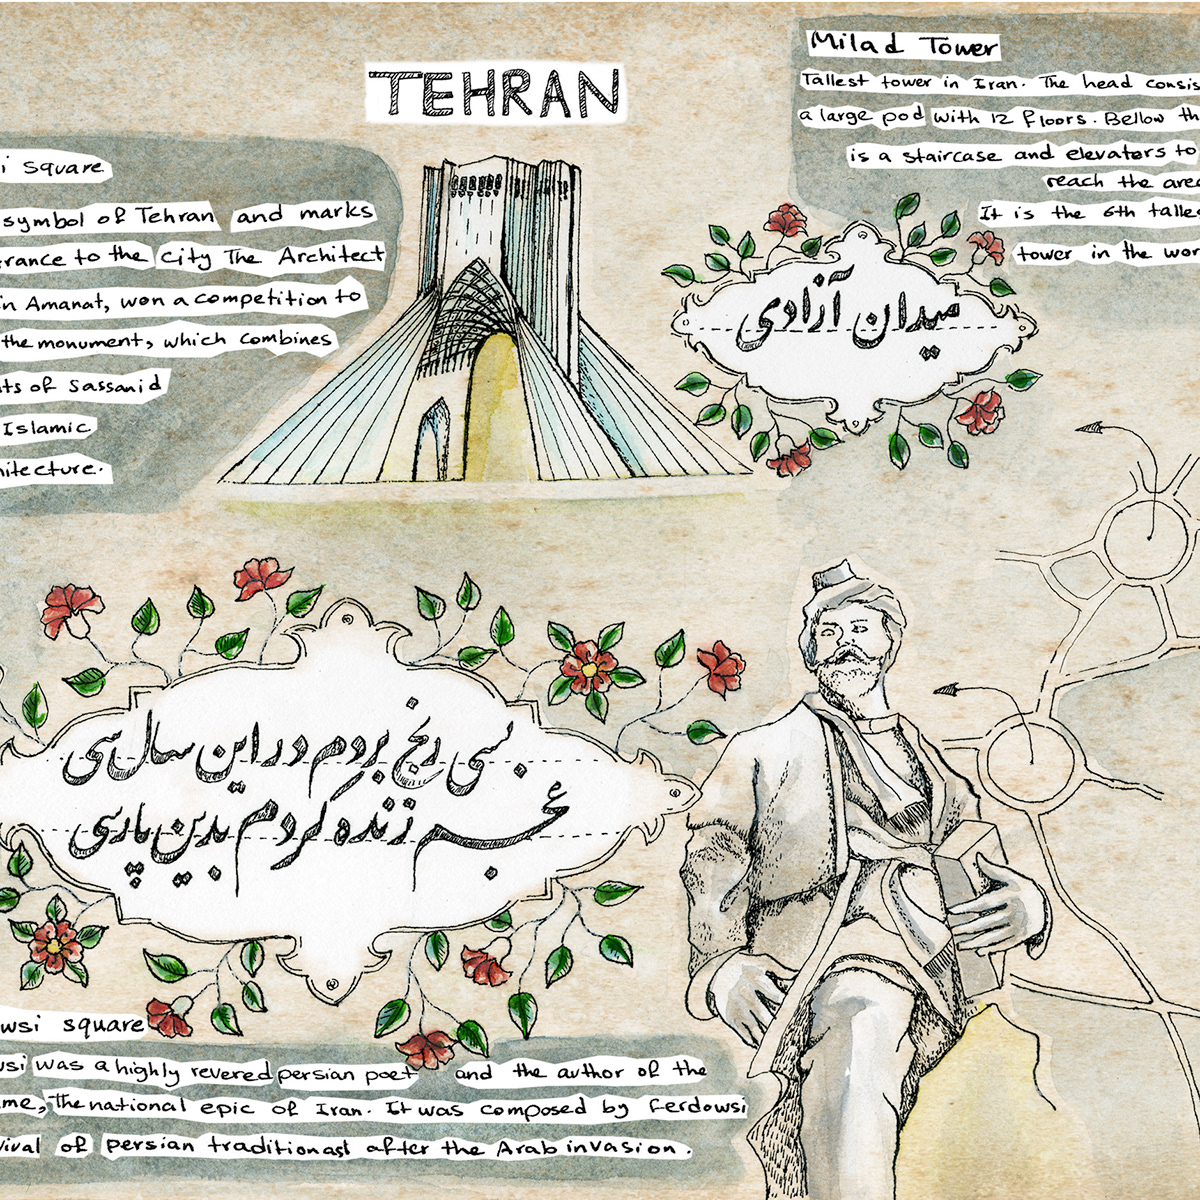 Tehran Map